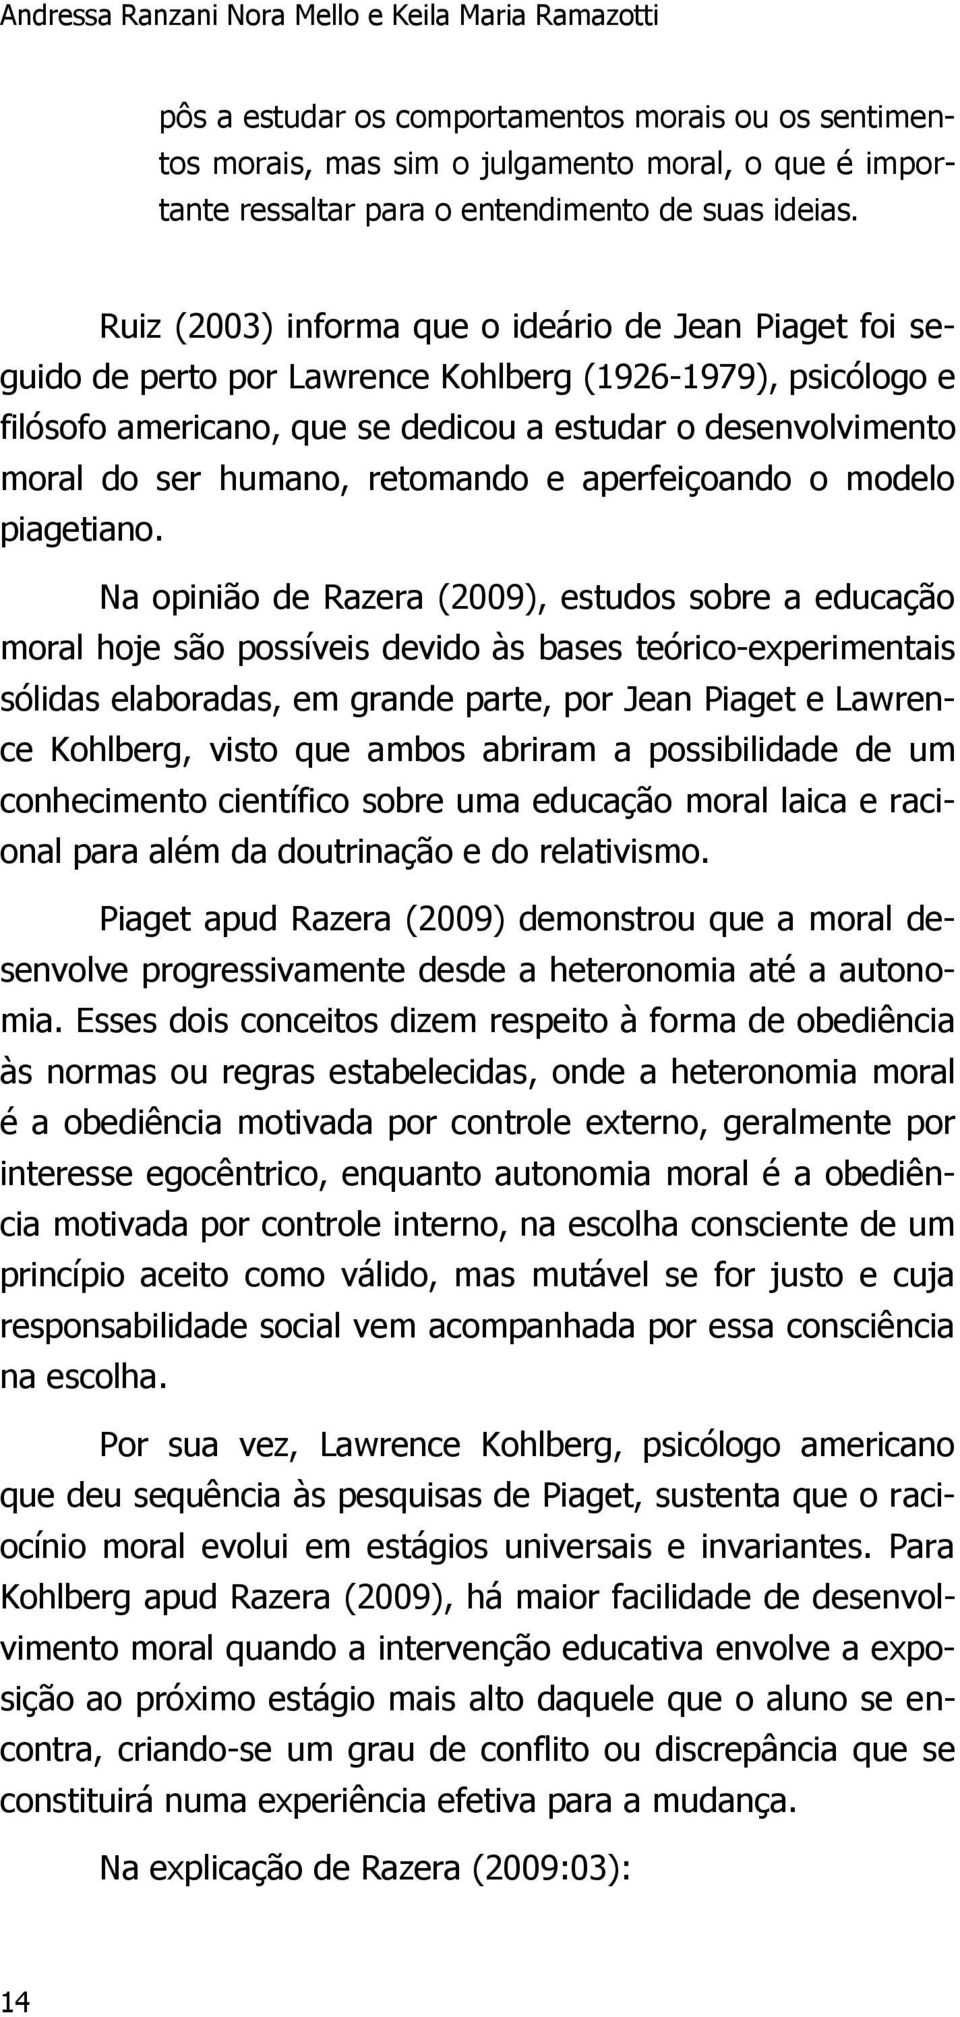 Ruiz (2003) informa que o ideário de Jean Piaget foi seguido de perto por Lawrence Kohlberg (1926-1979), psicólogo e filósofo americano, que se dedicou a estudar o desenvolvimento moral do ser